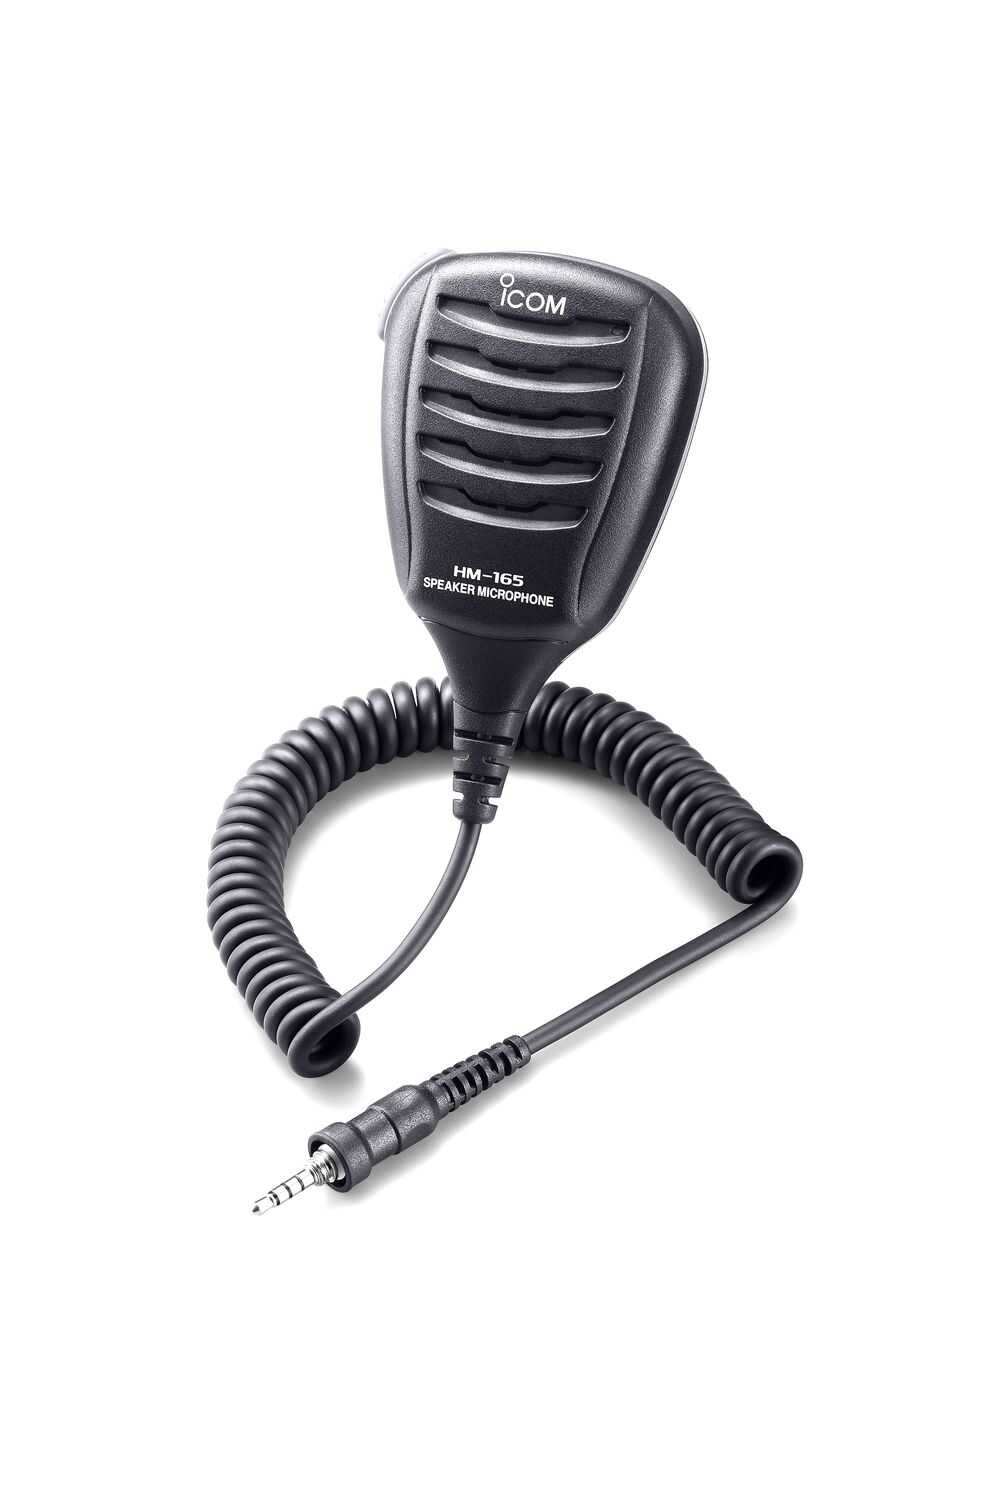 ICOM HM-165 Lautsprecher-Mikrofon